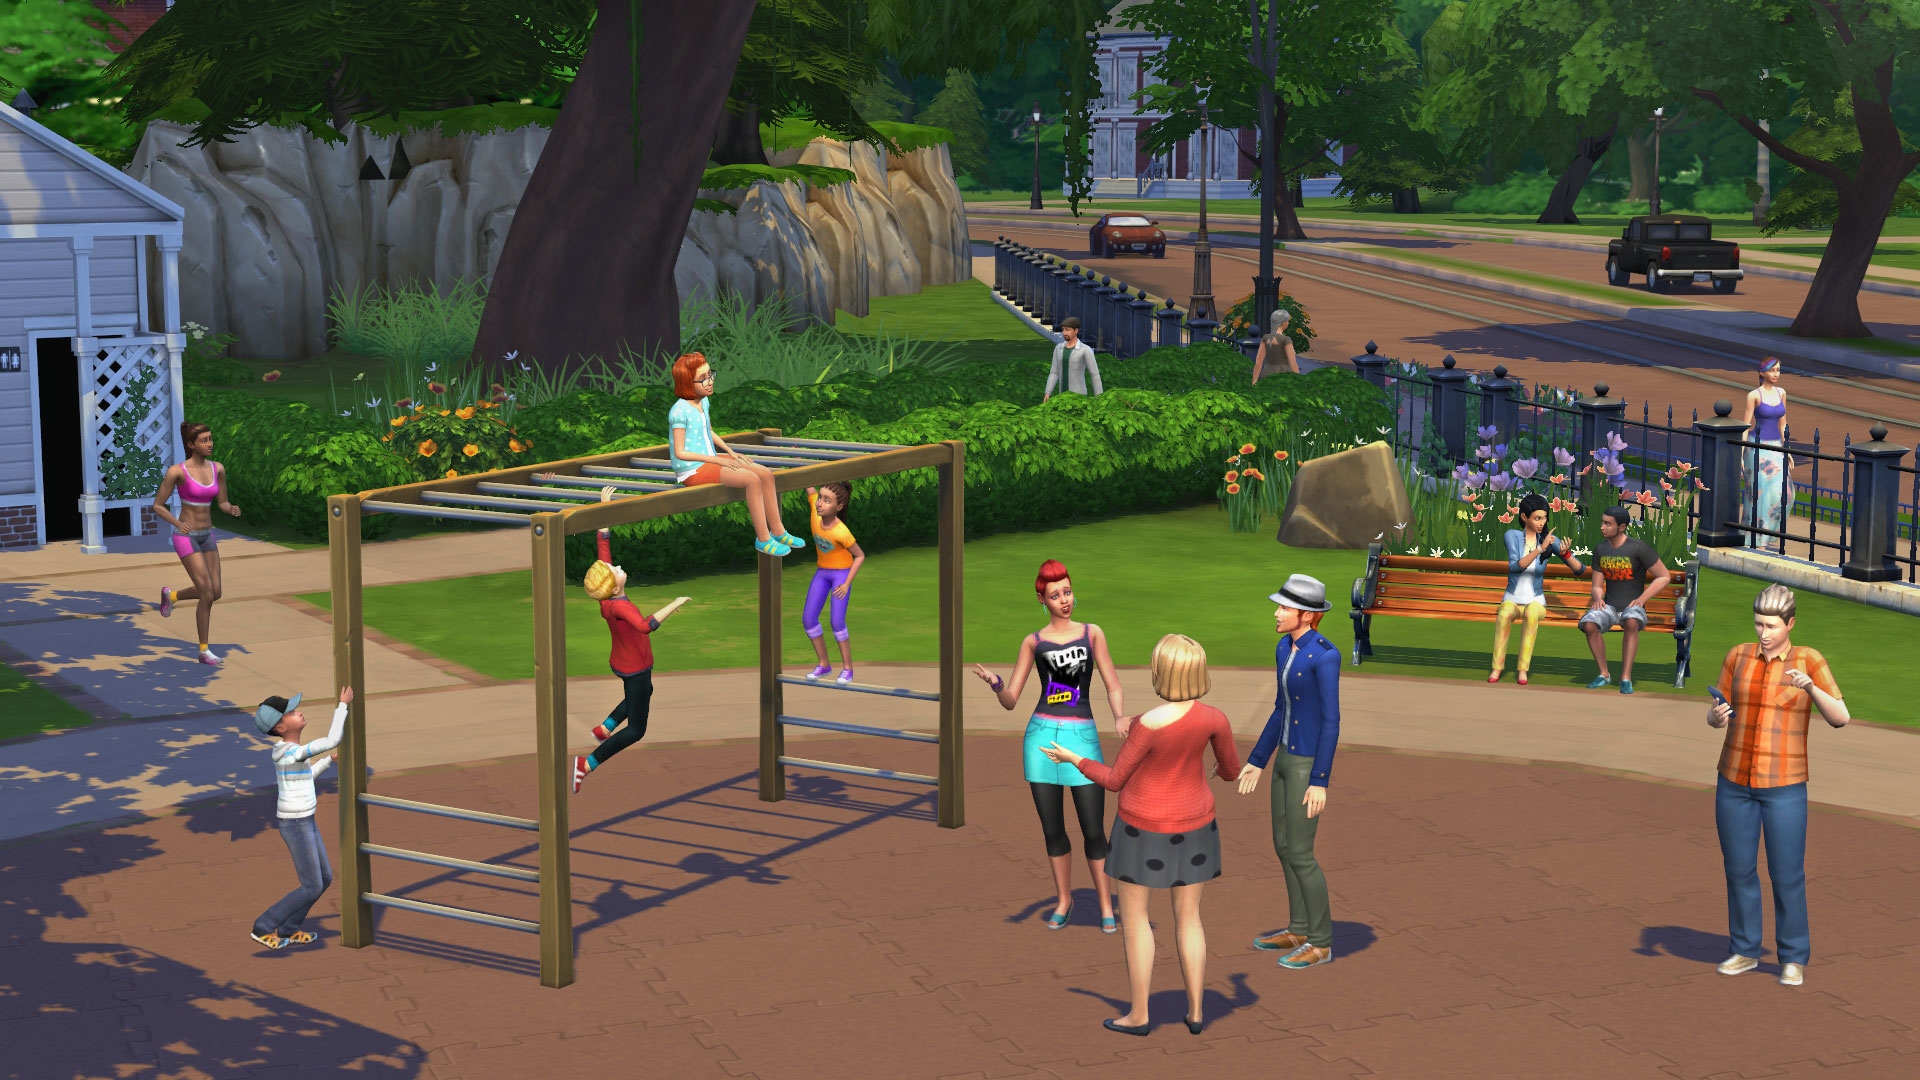 The Sims 4 - Create a Sim Demo Update